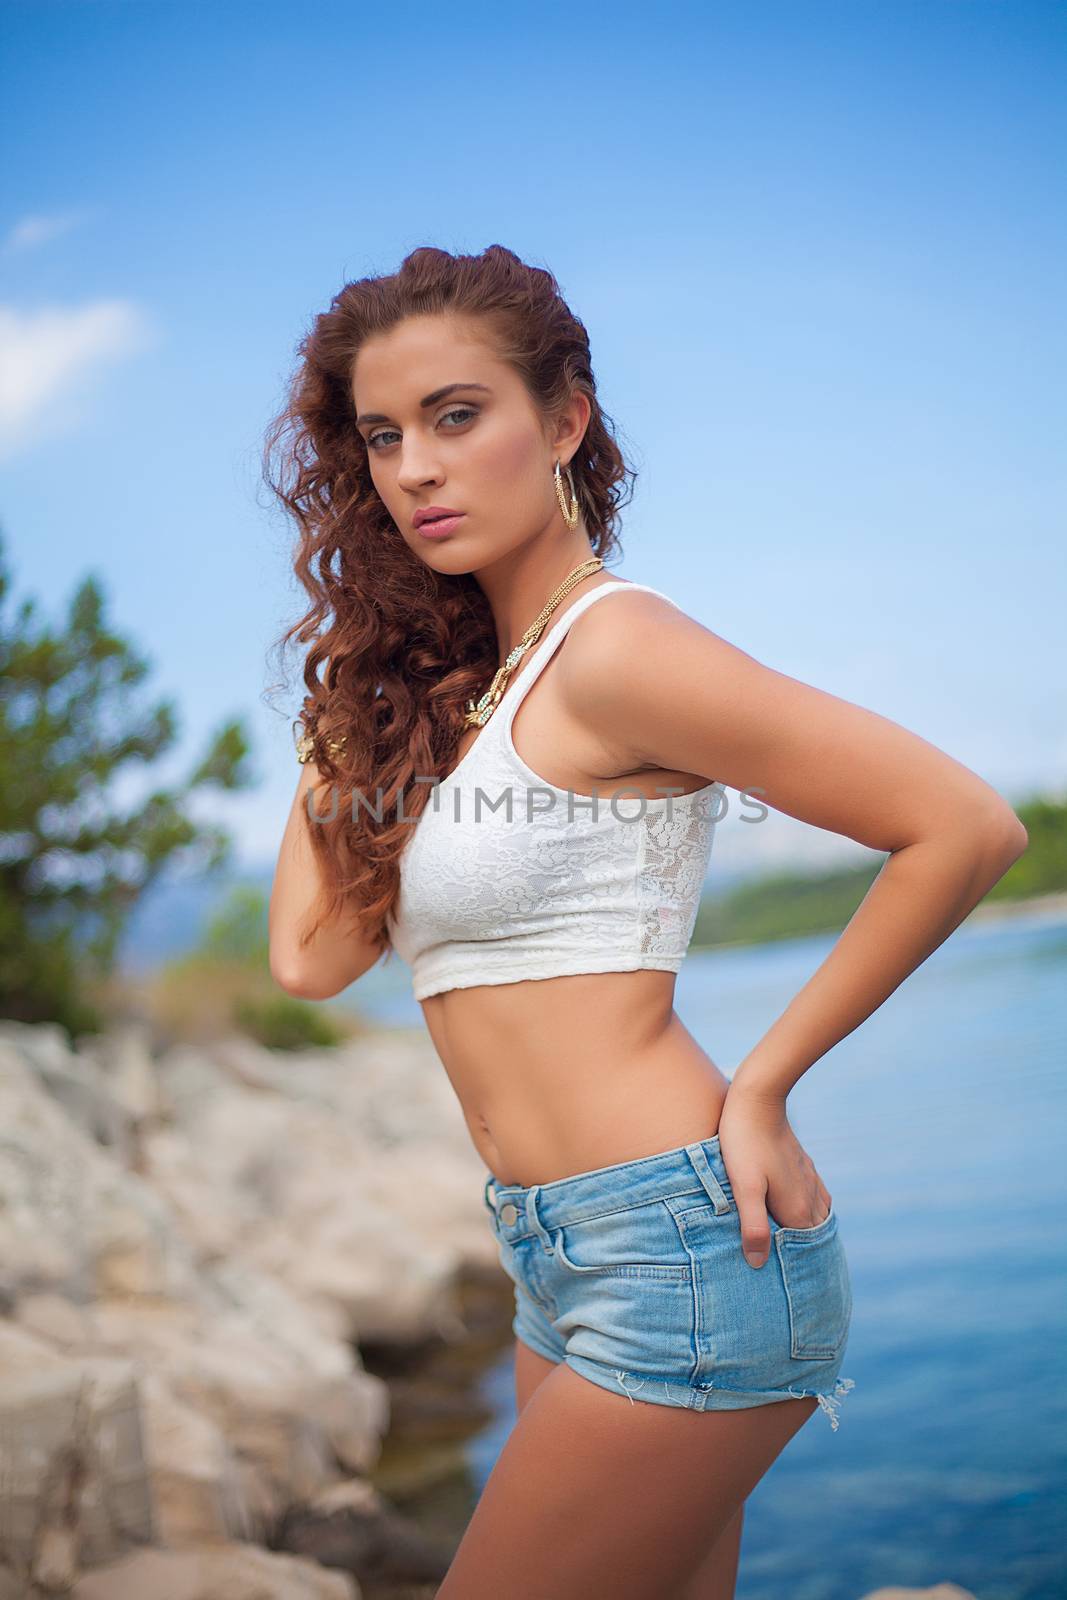 sexy girl in jean shorts on sea beach by fotoduki